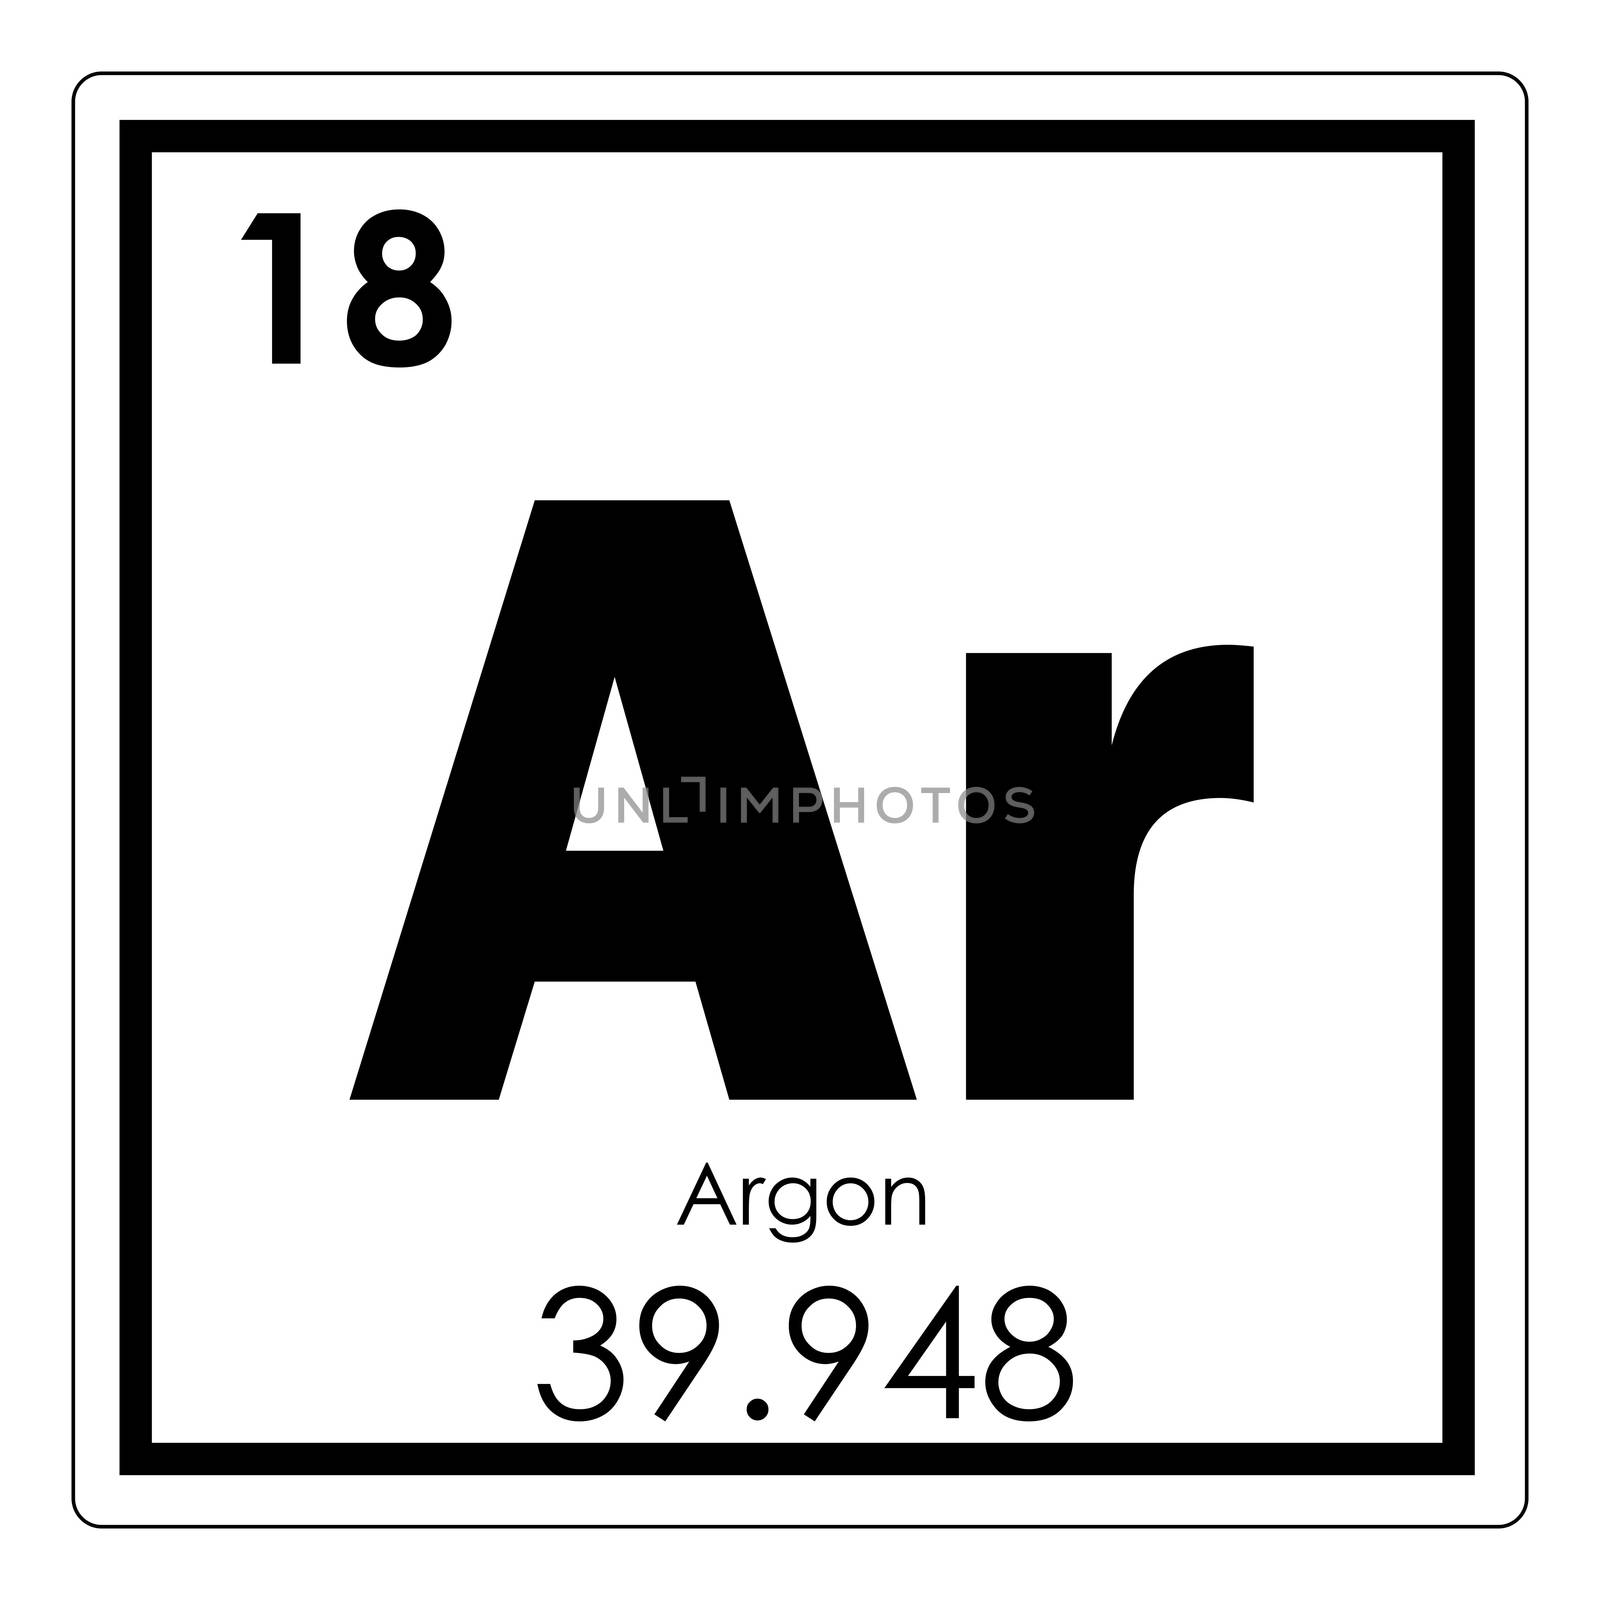 Argon chemical element by tony4urban